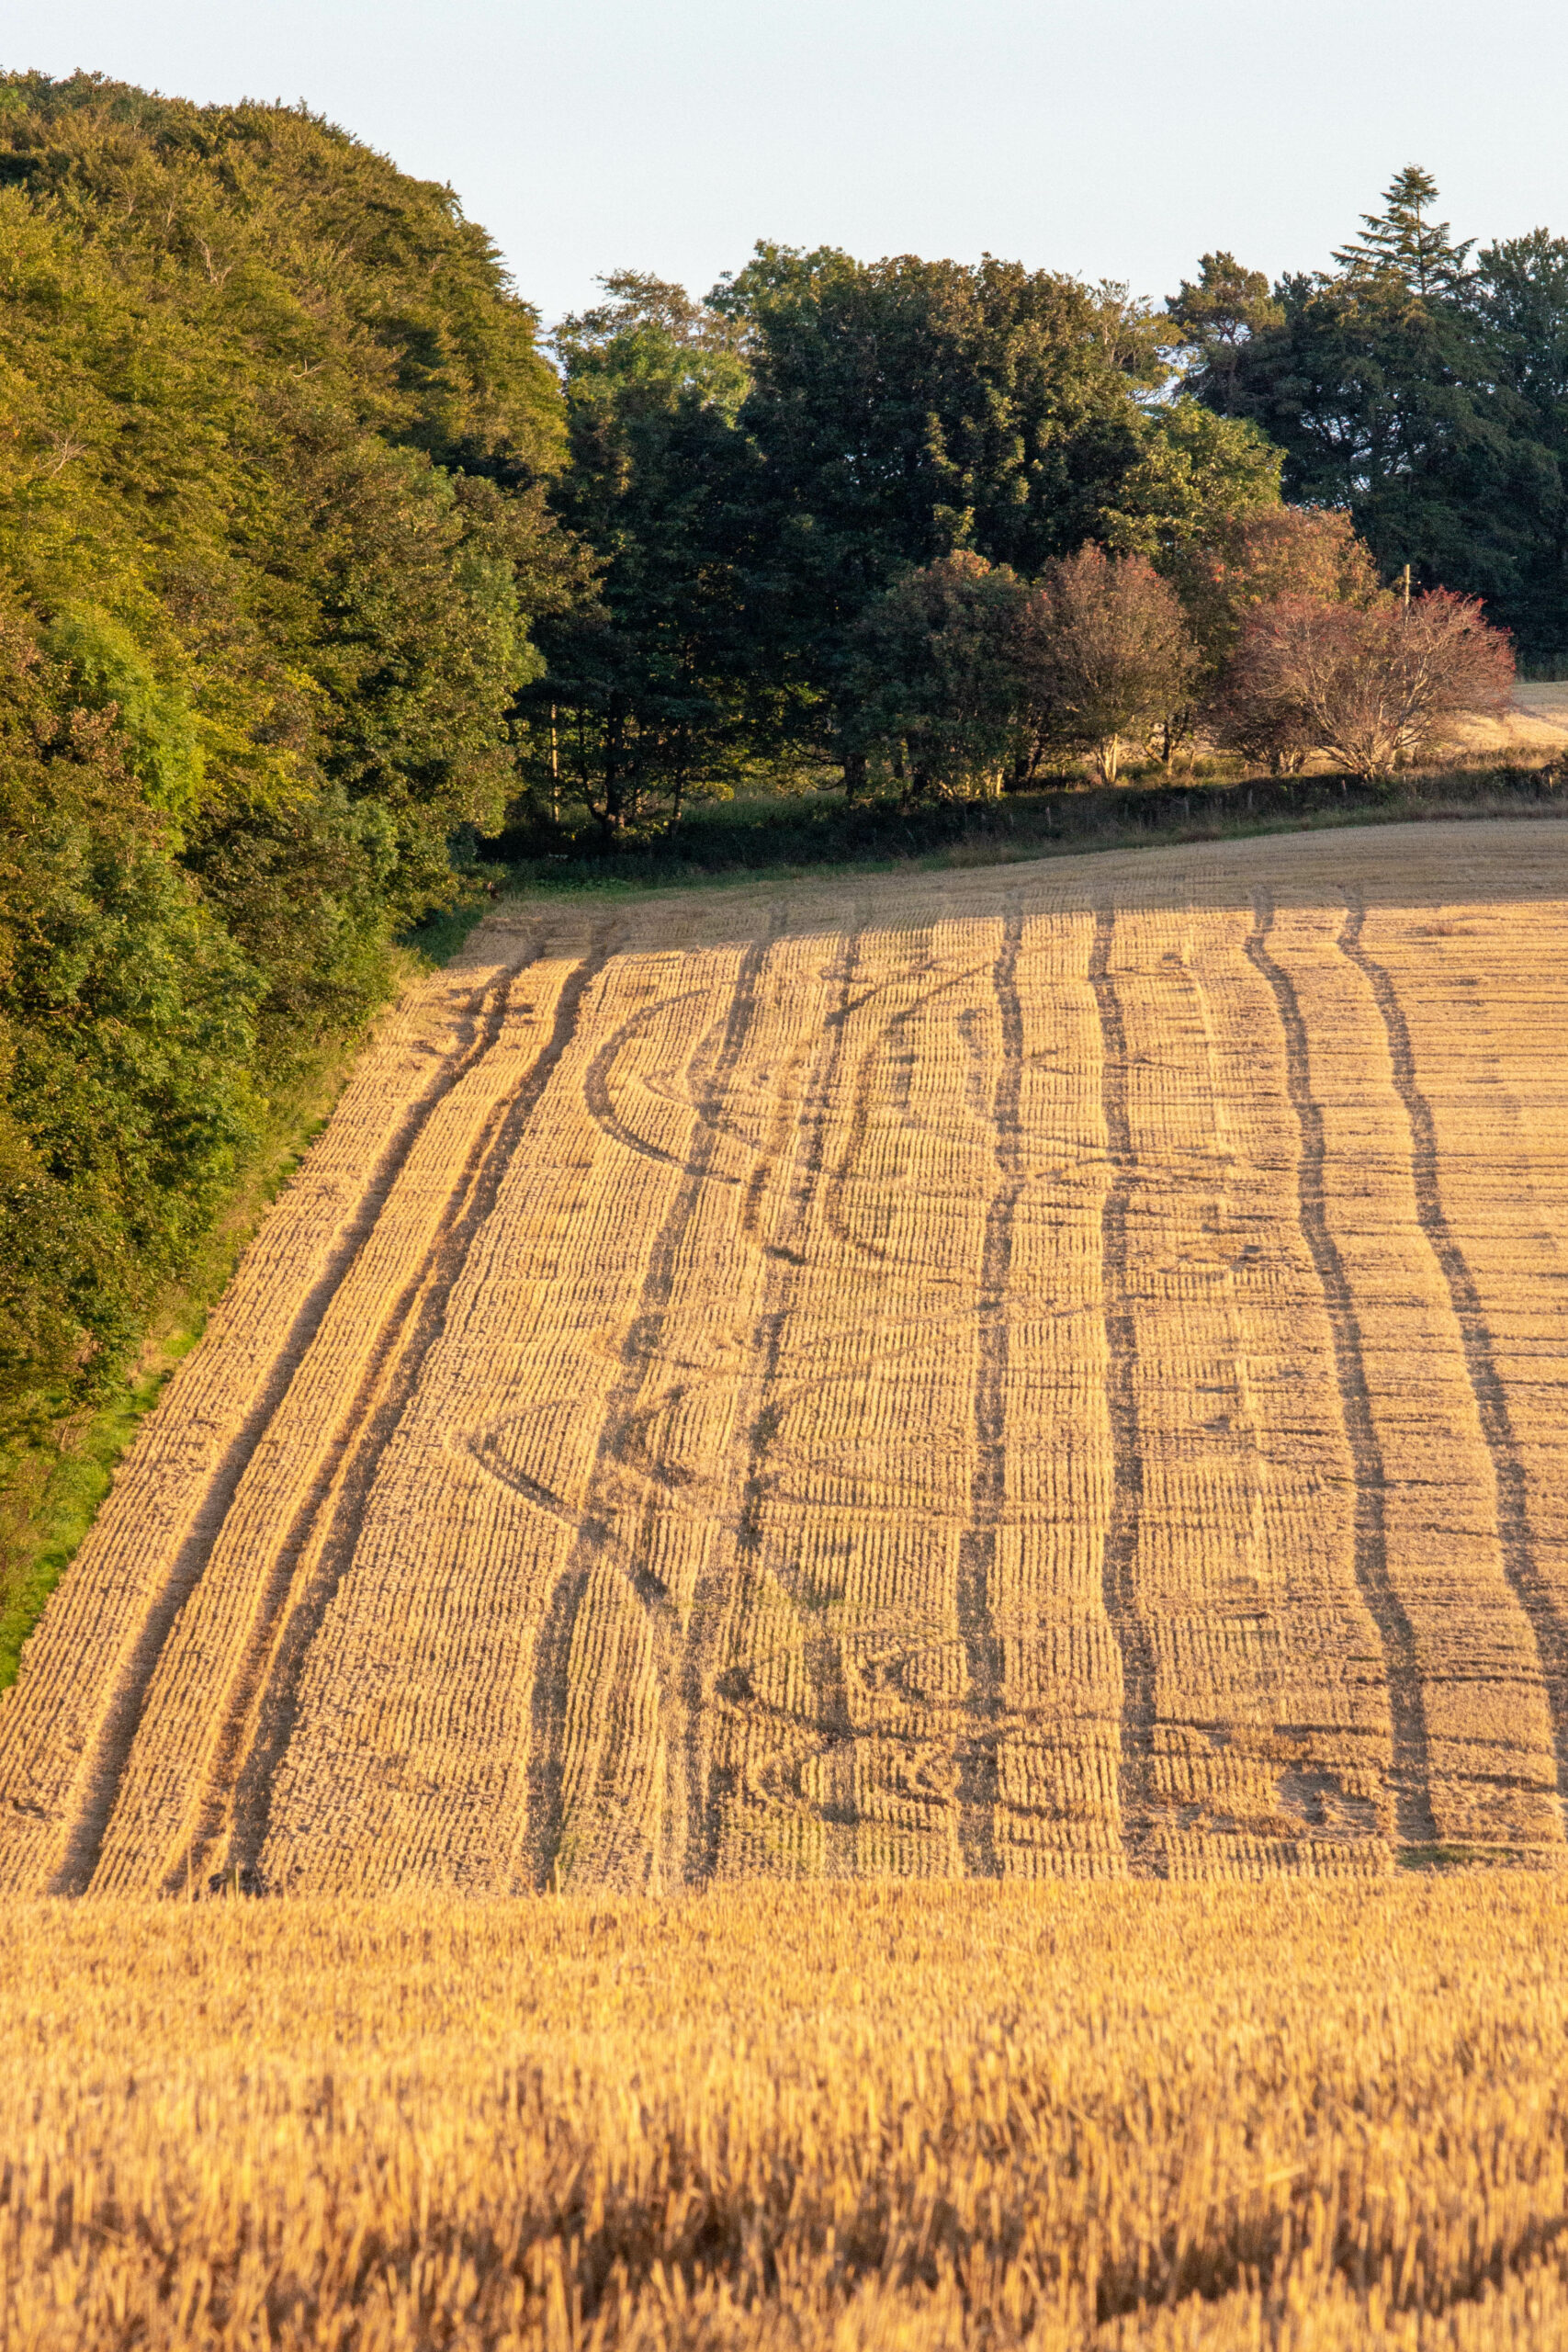 Tracks in Cut Barley Field